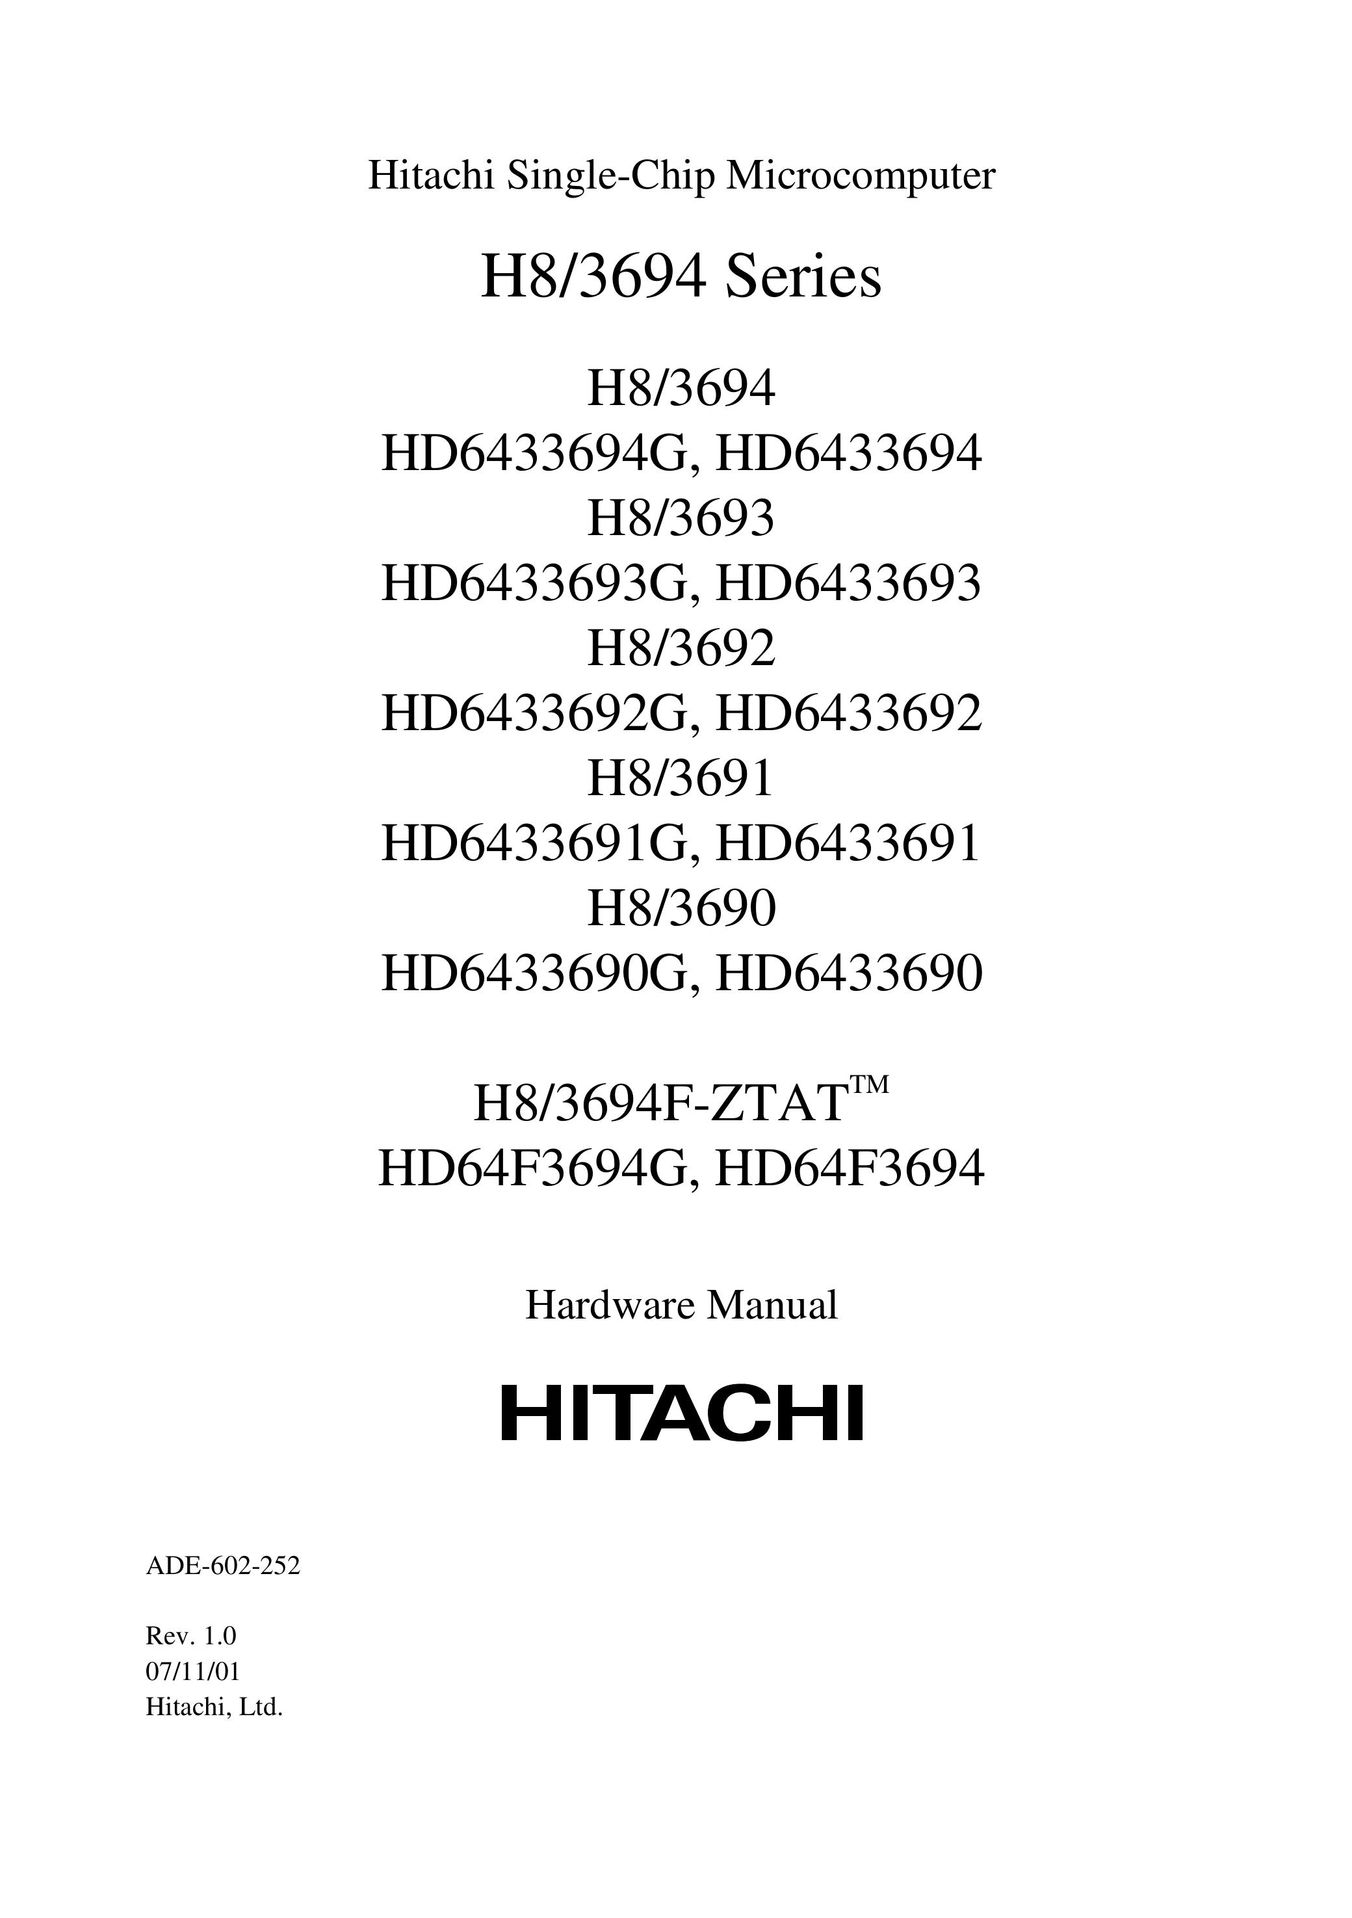 Hitachi HD6433690G TV Mount User Manual